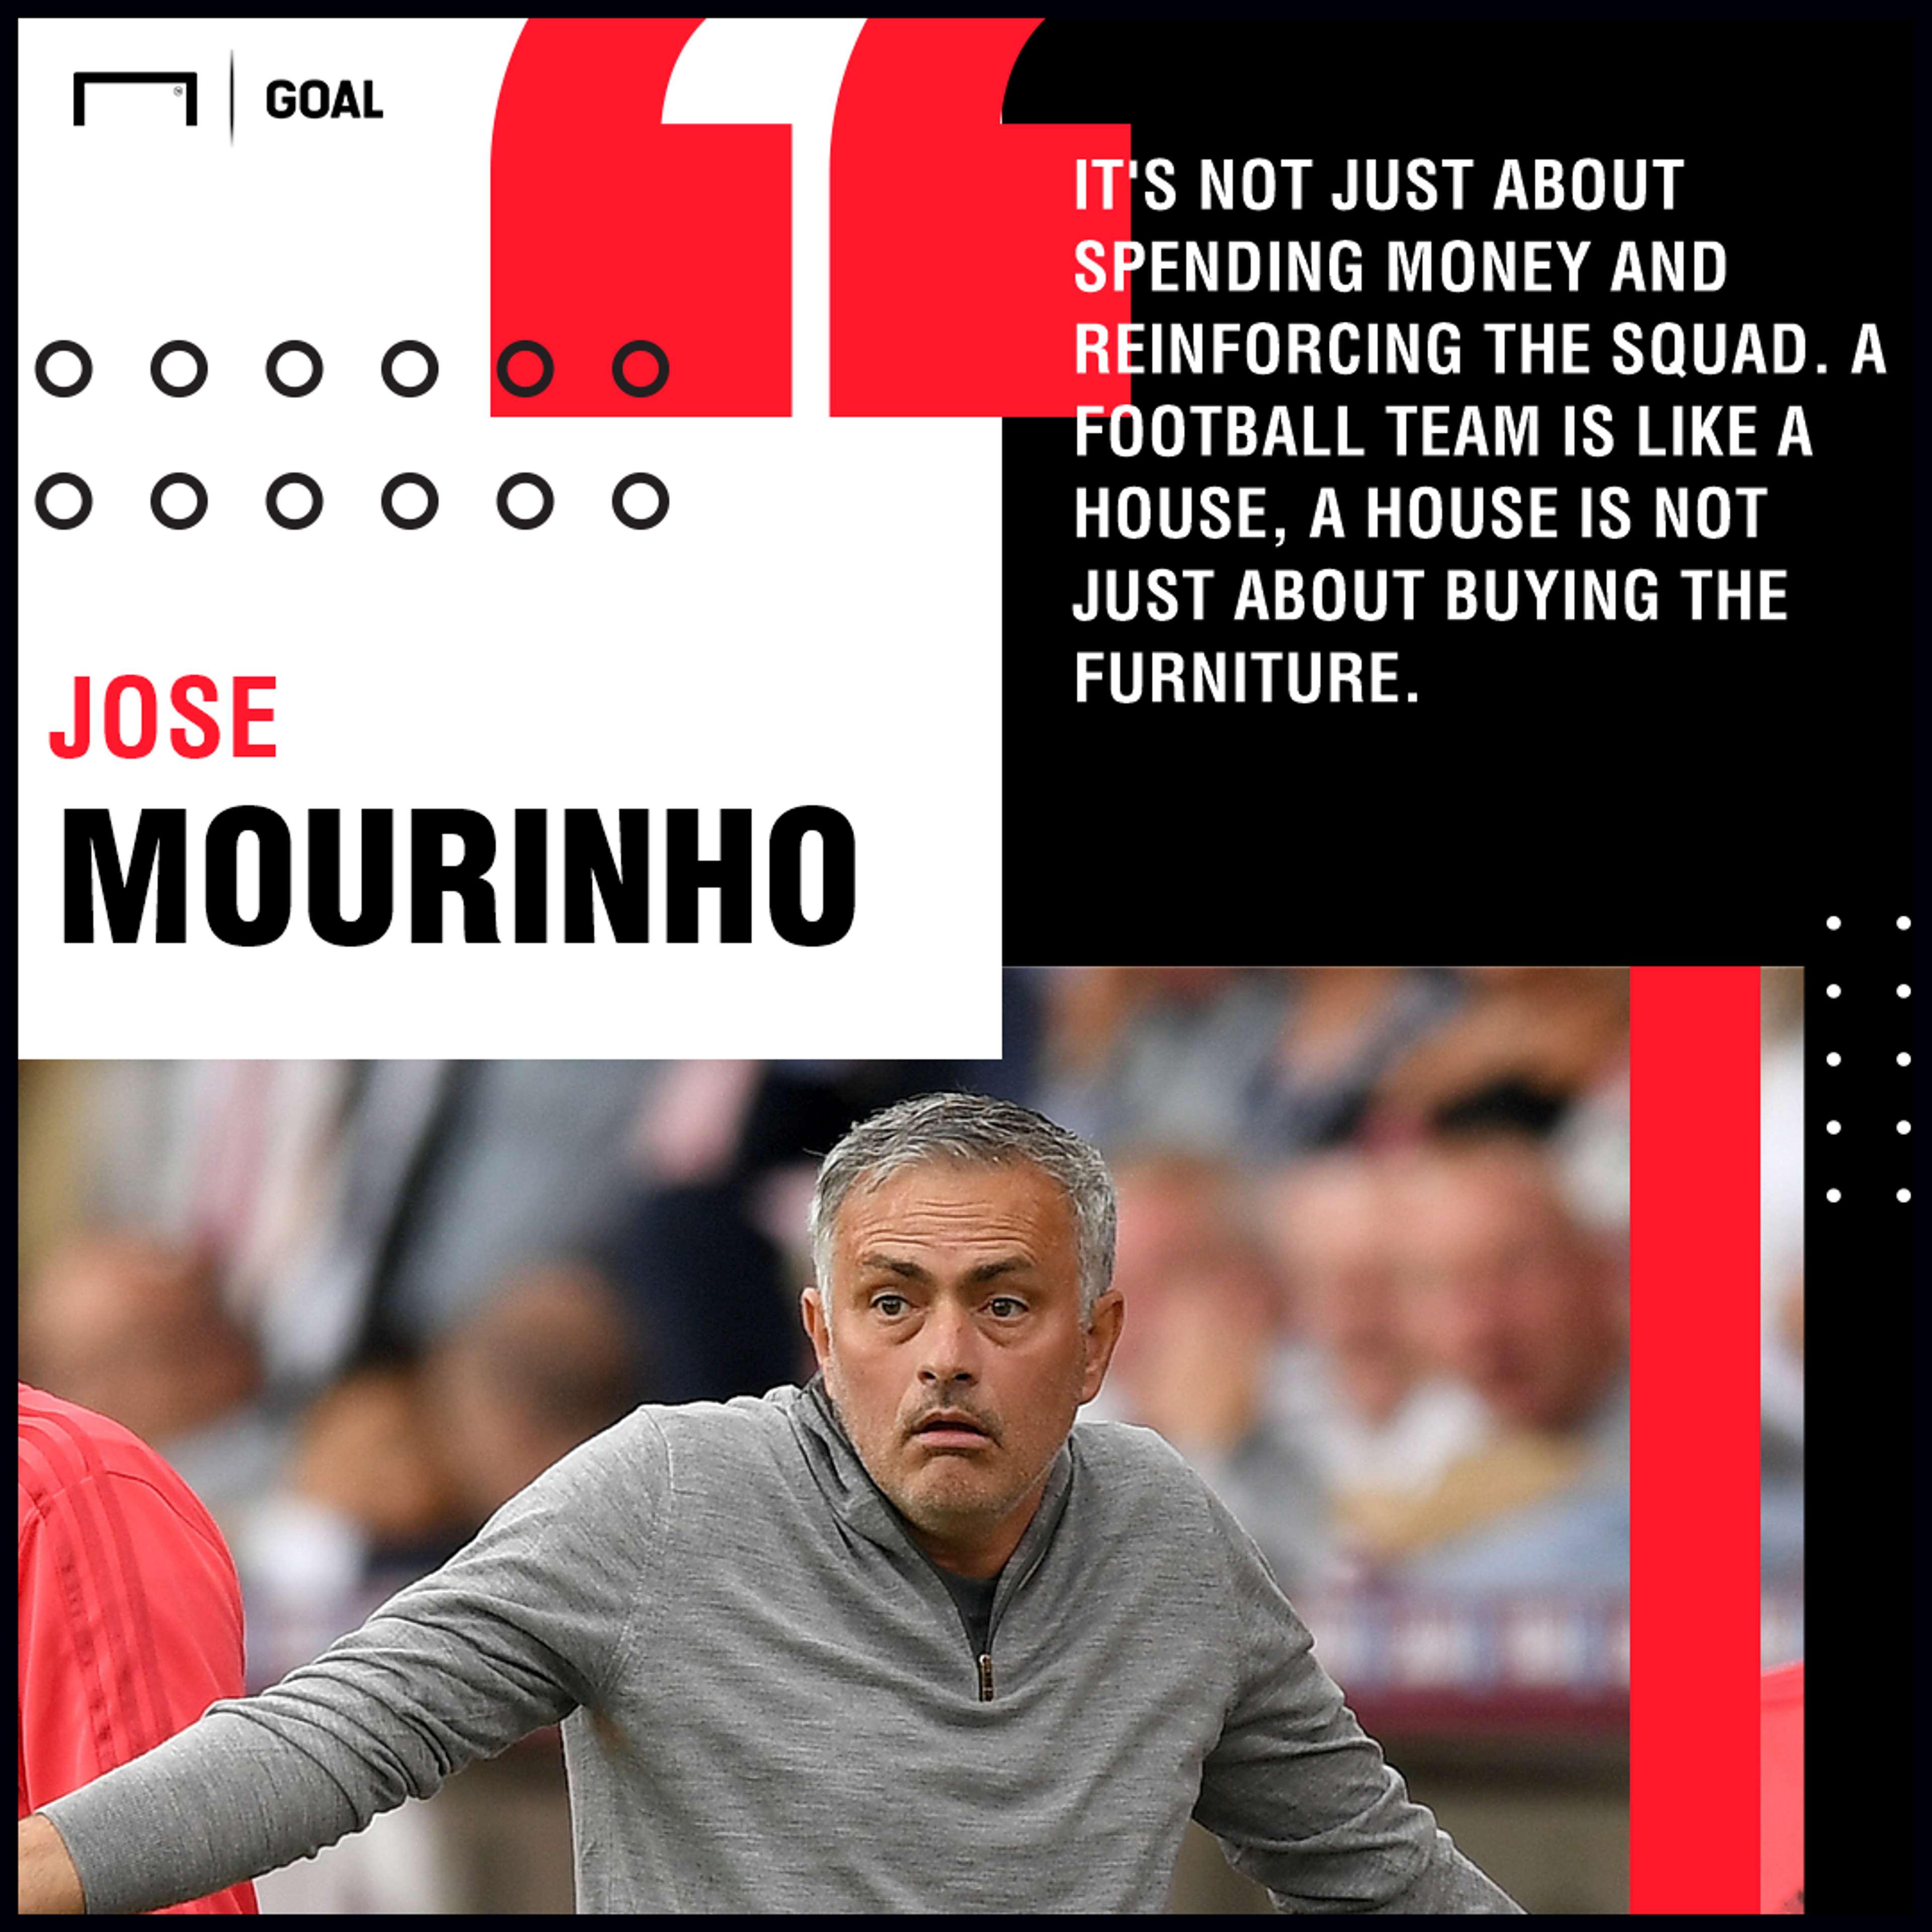 Jose Mourinho house quote